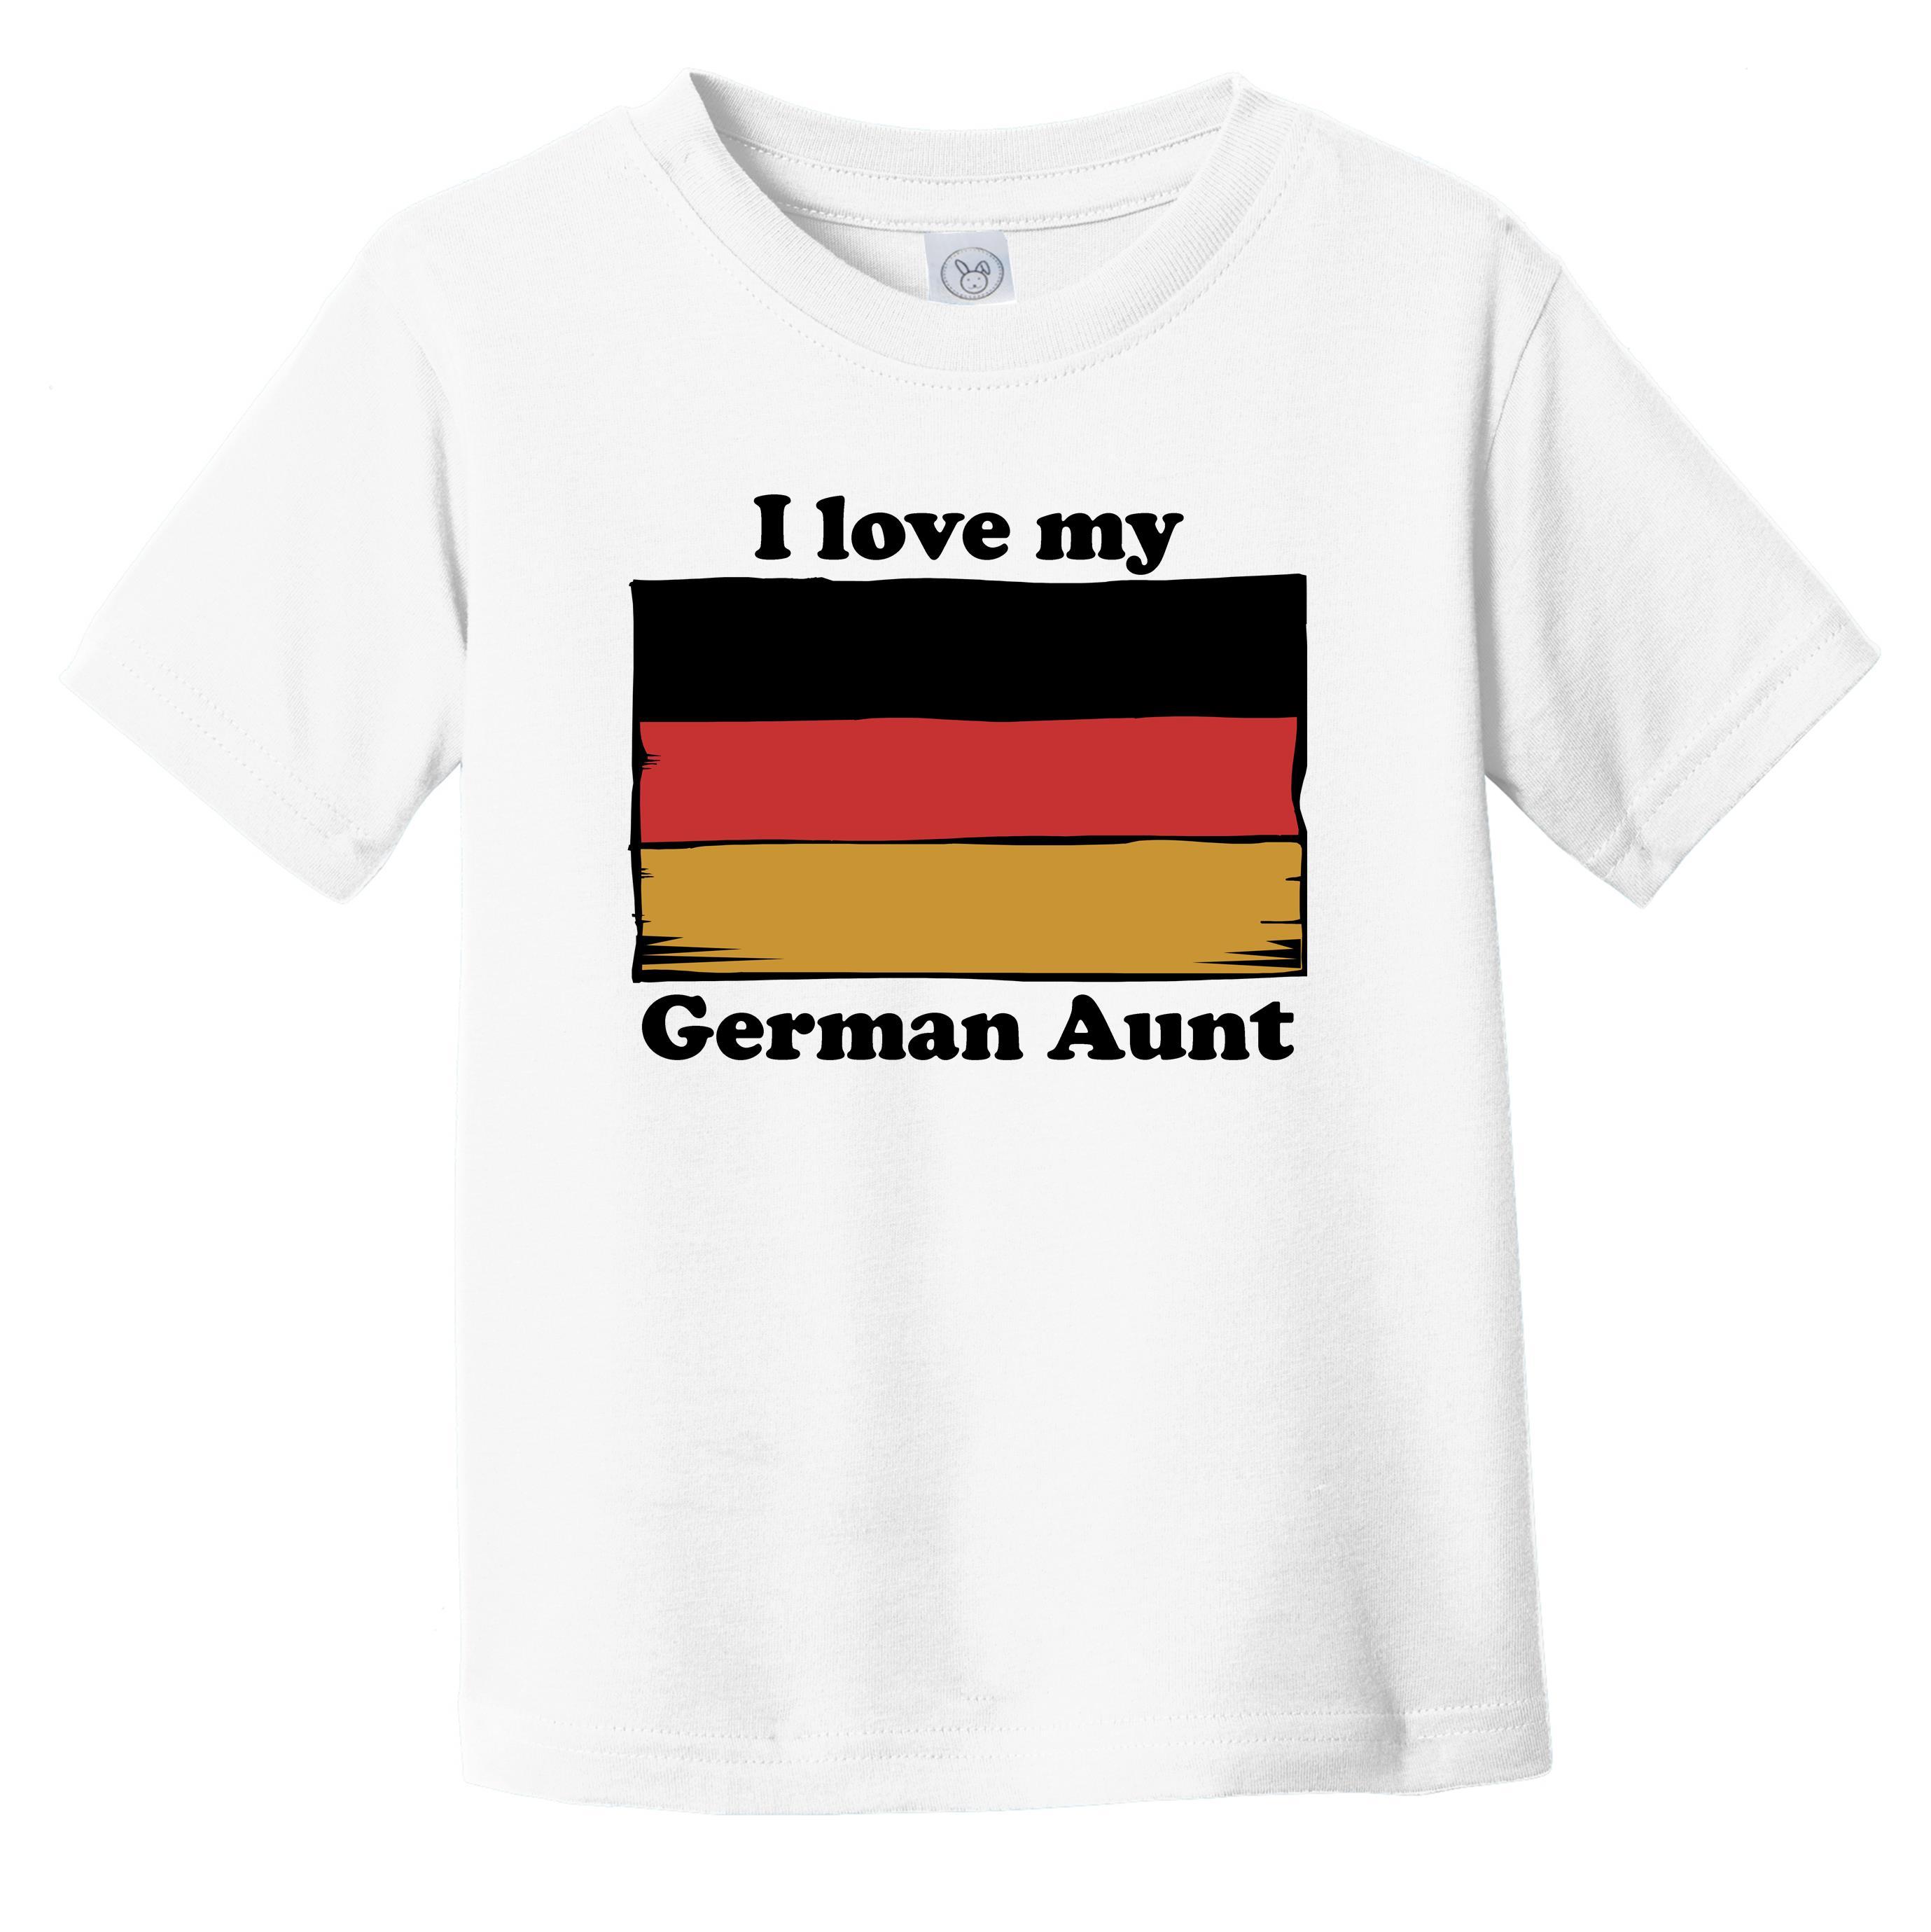 German Aunt